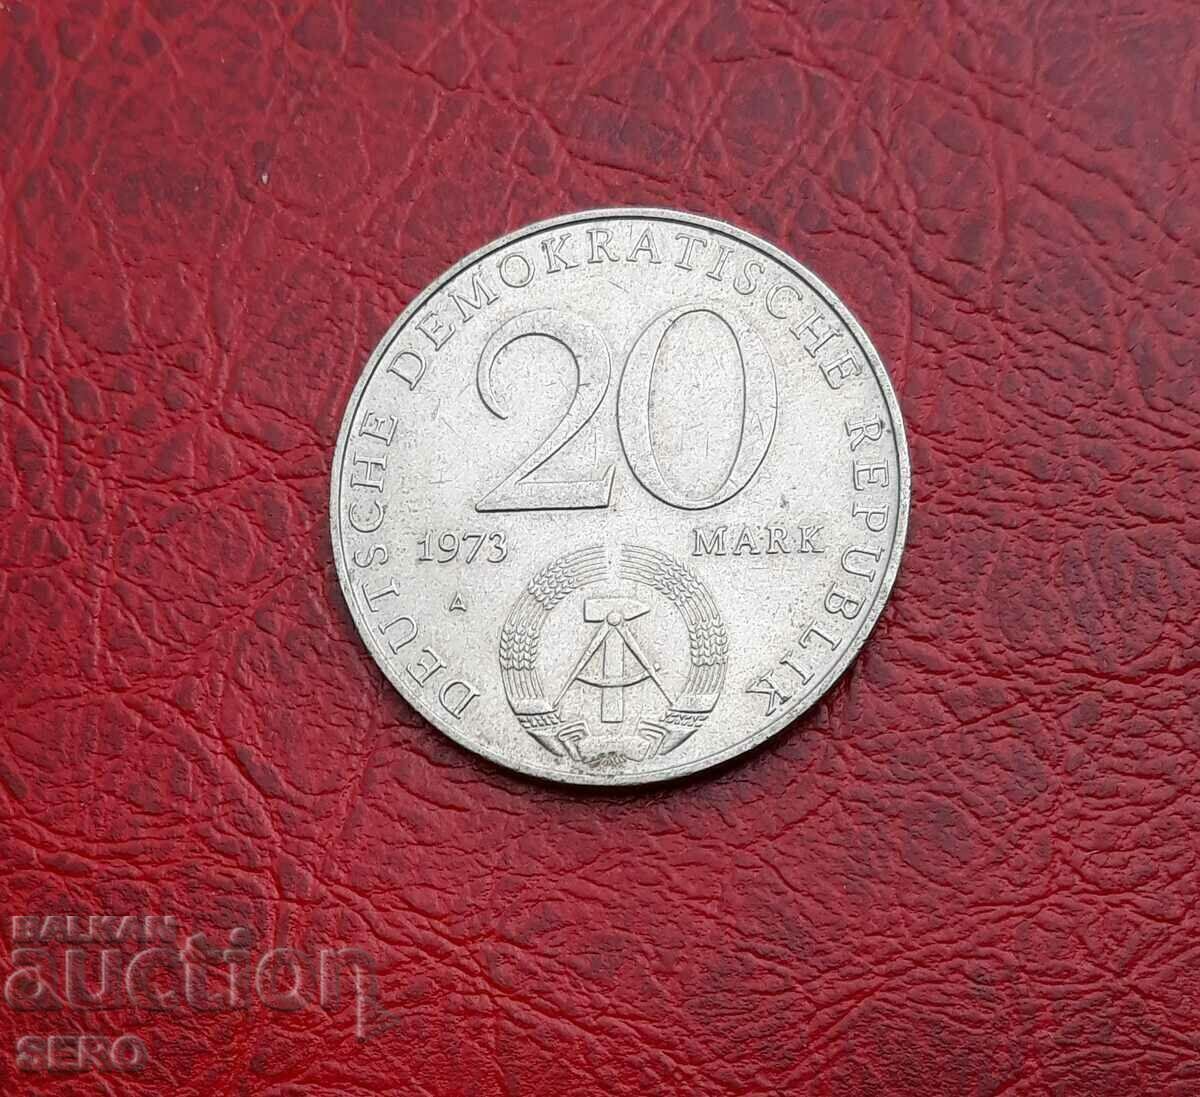 Германия-ГДР-20 марки 1973-Ото Гротевол-политик